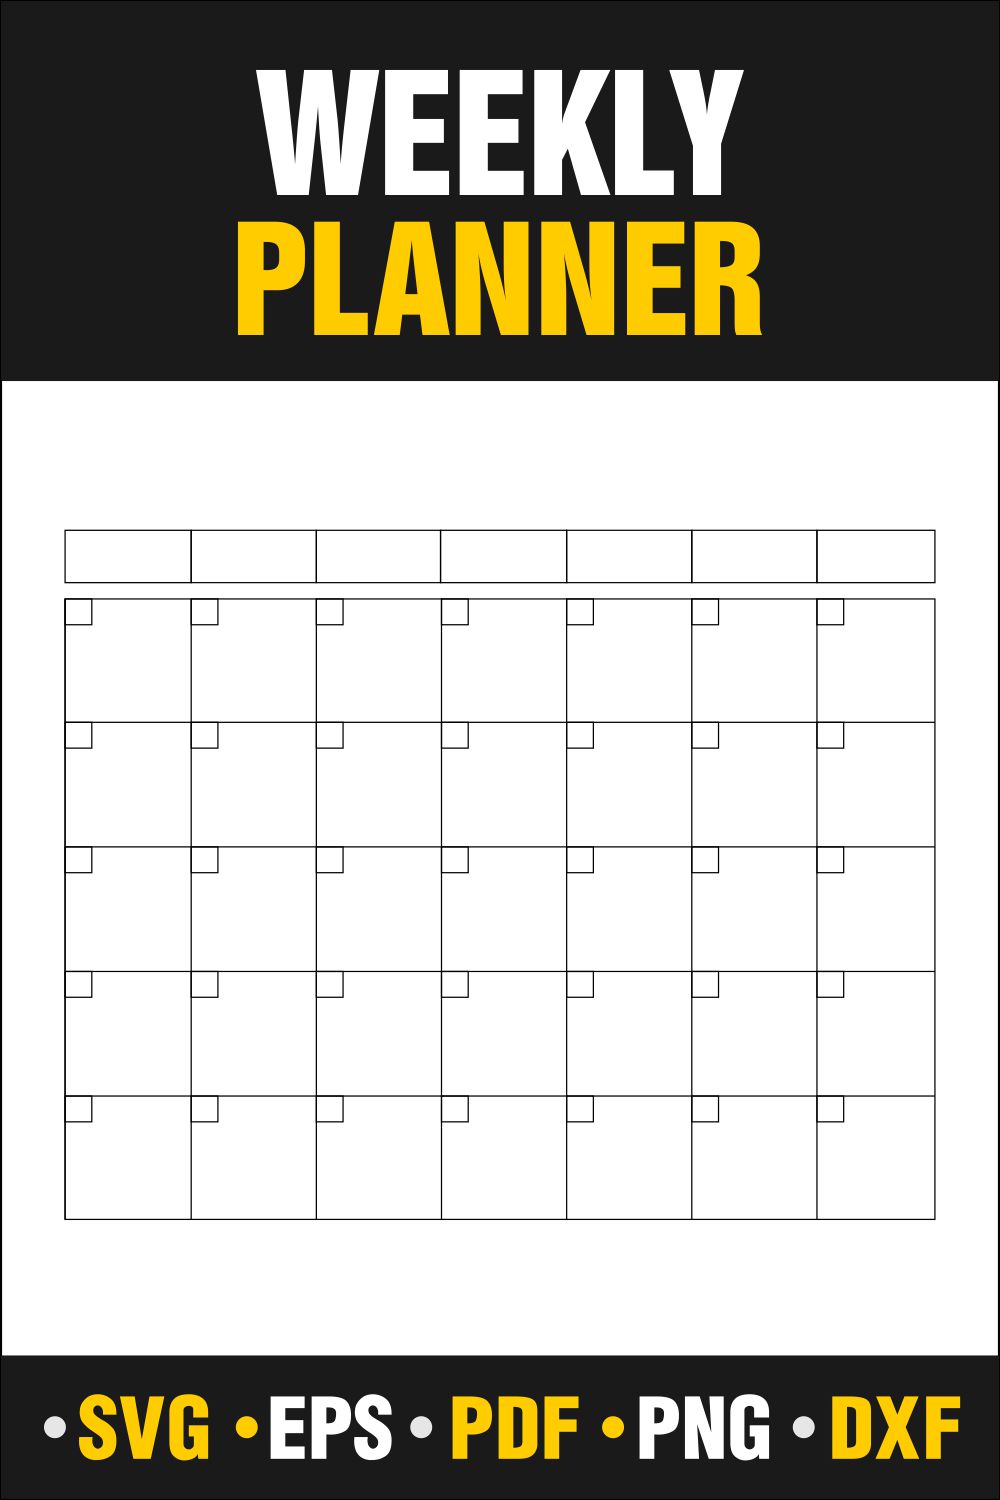 Images of elegant weekly planner template